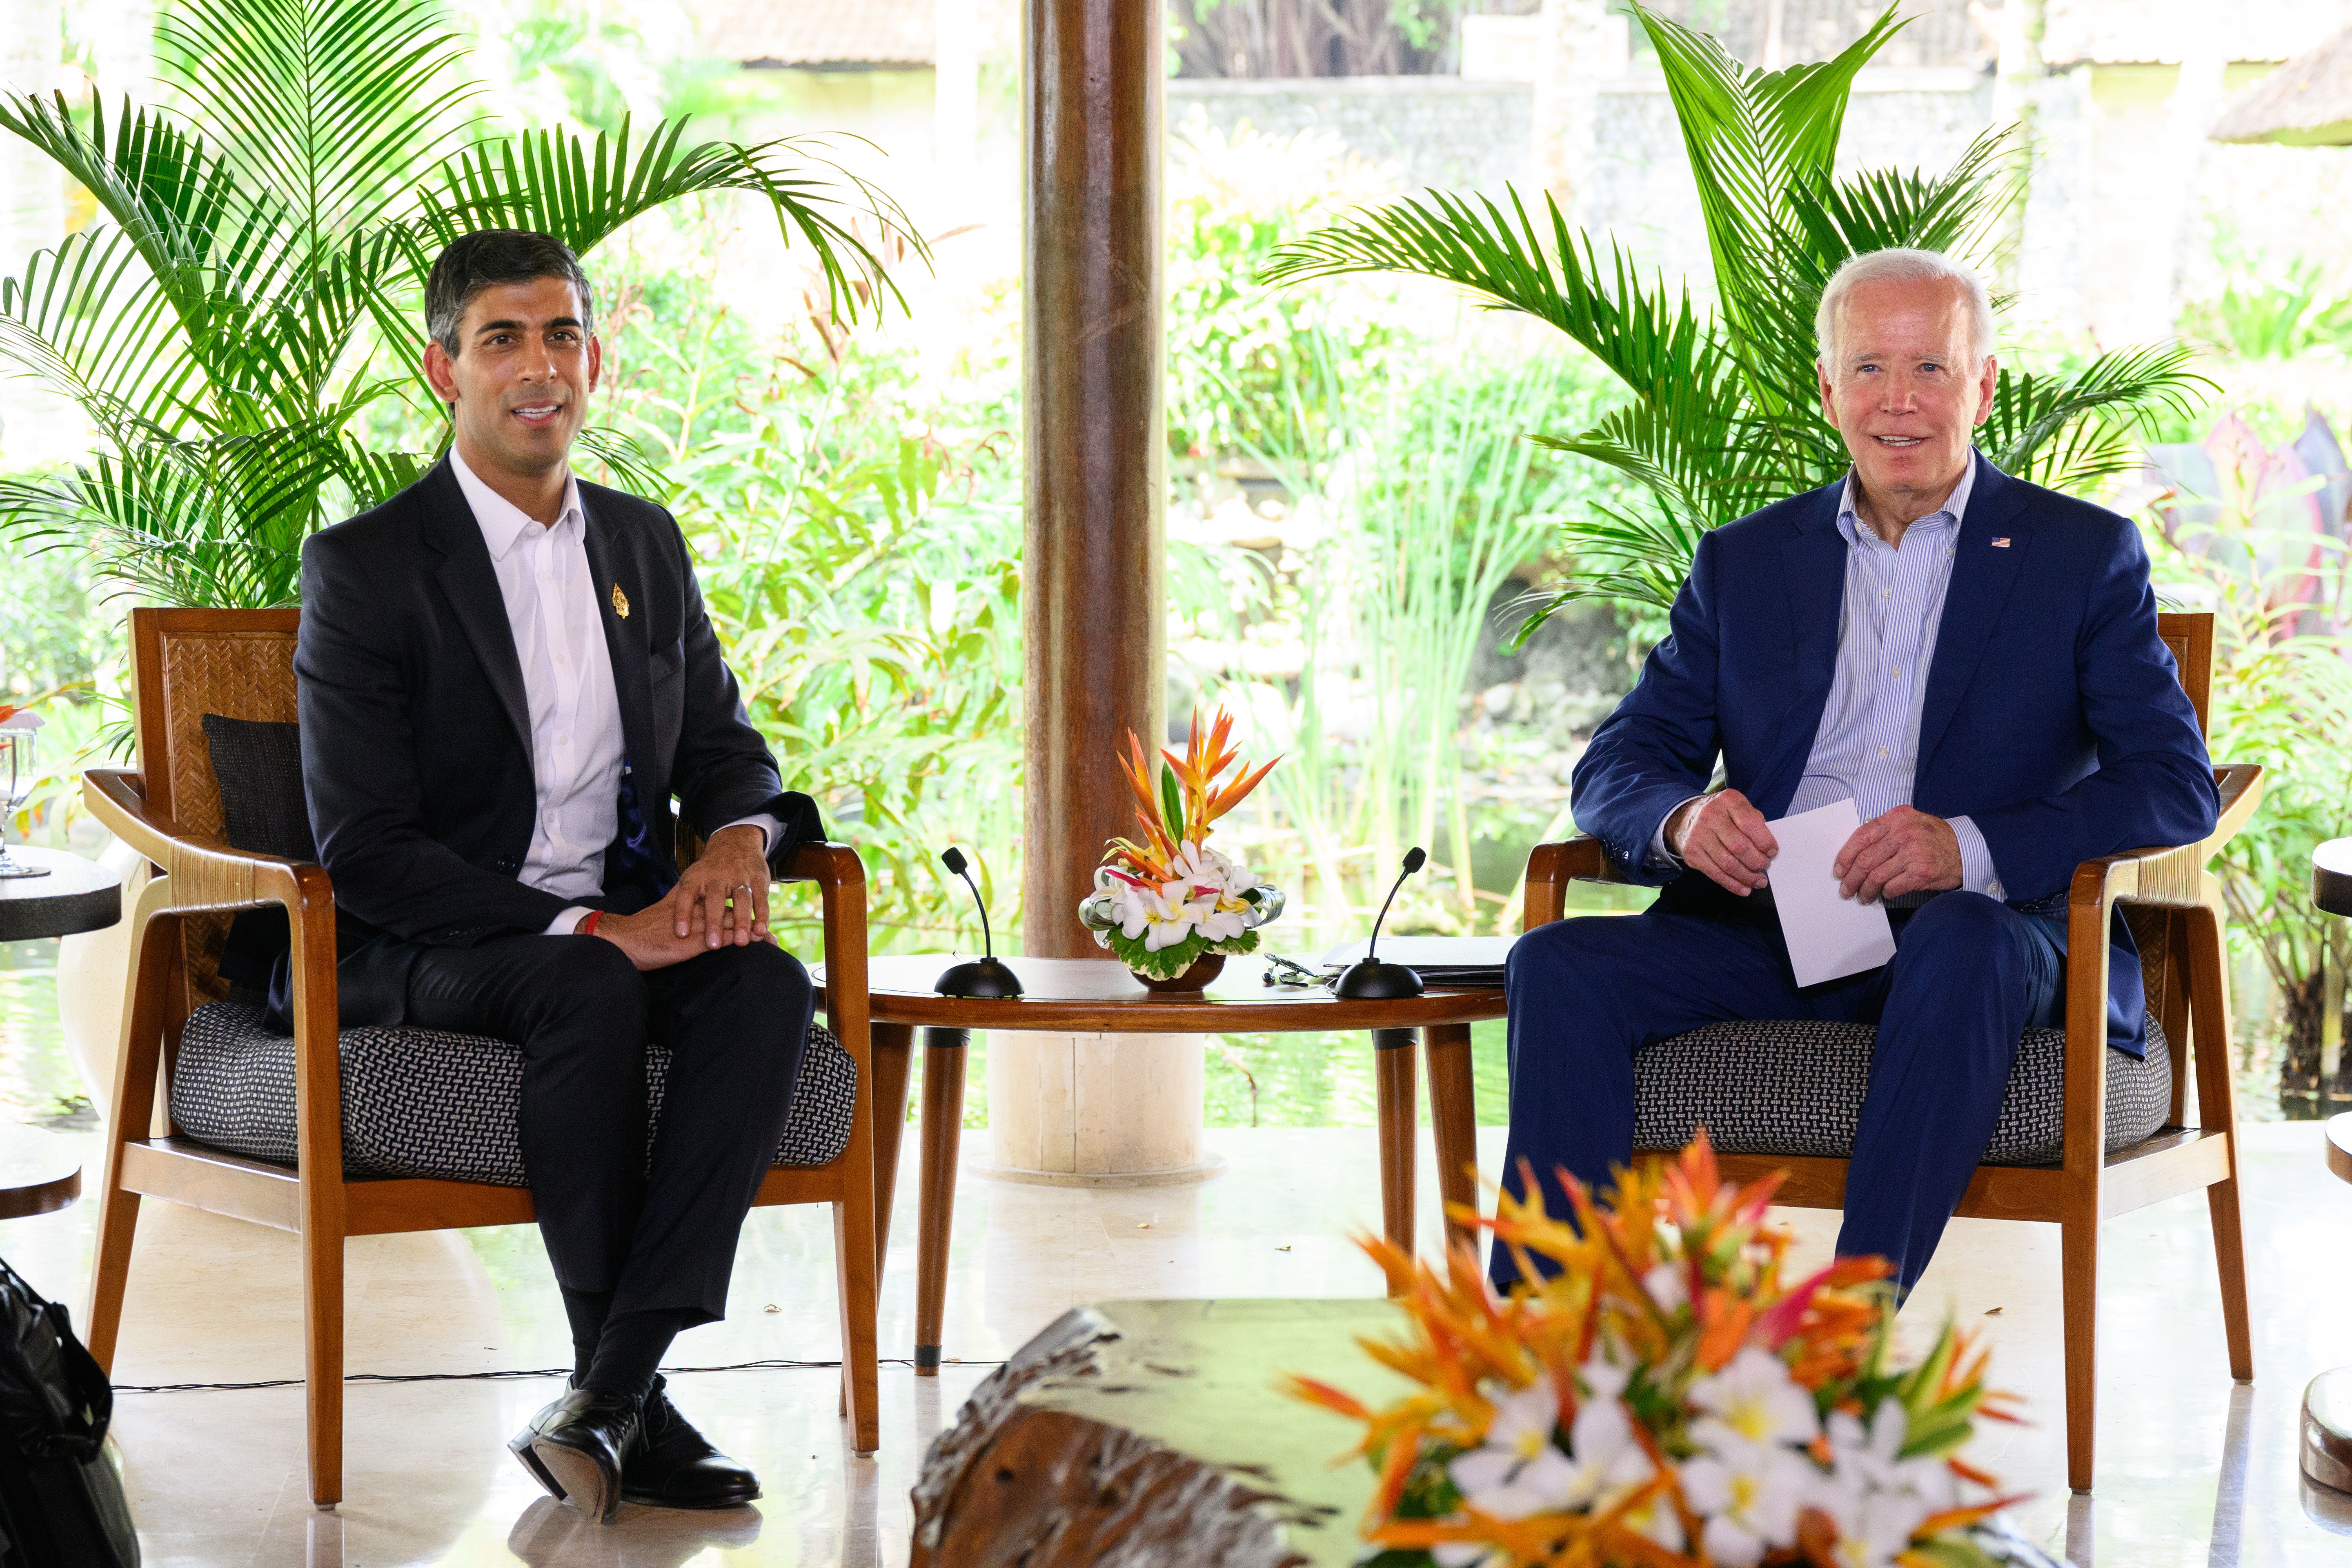 Prime Minister Rishi Sunak speaks with US president Joe Biden at the G20 summit in Bali (Leon Neal/PA)